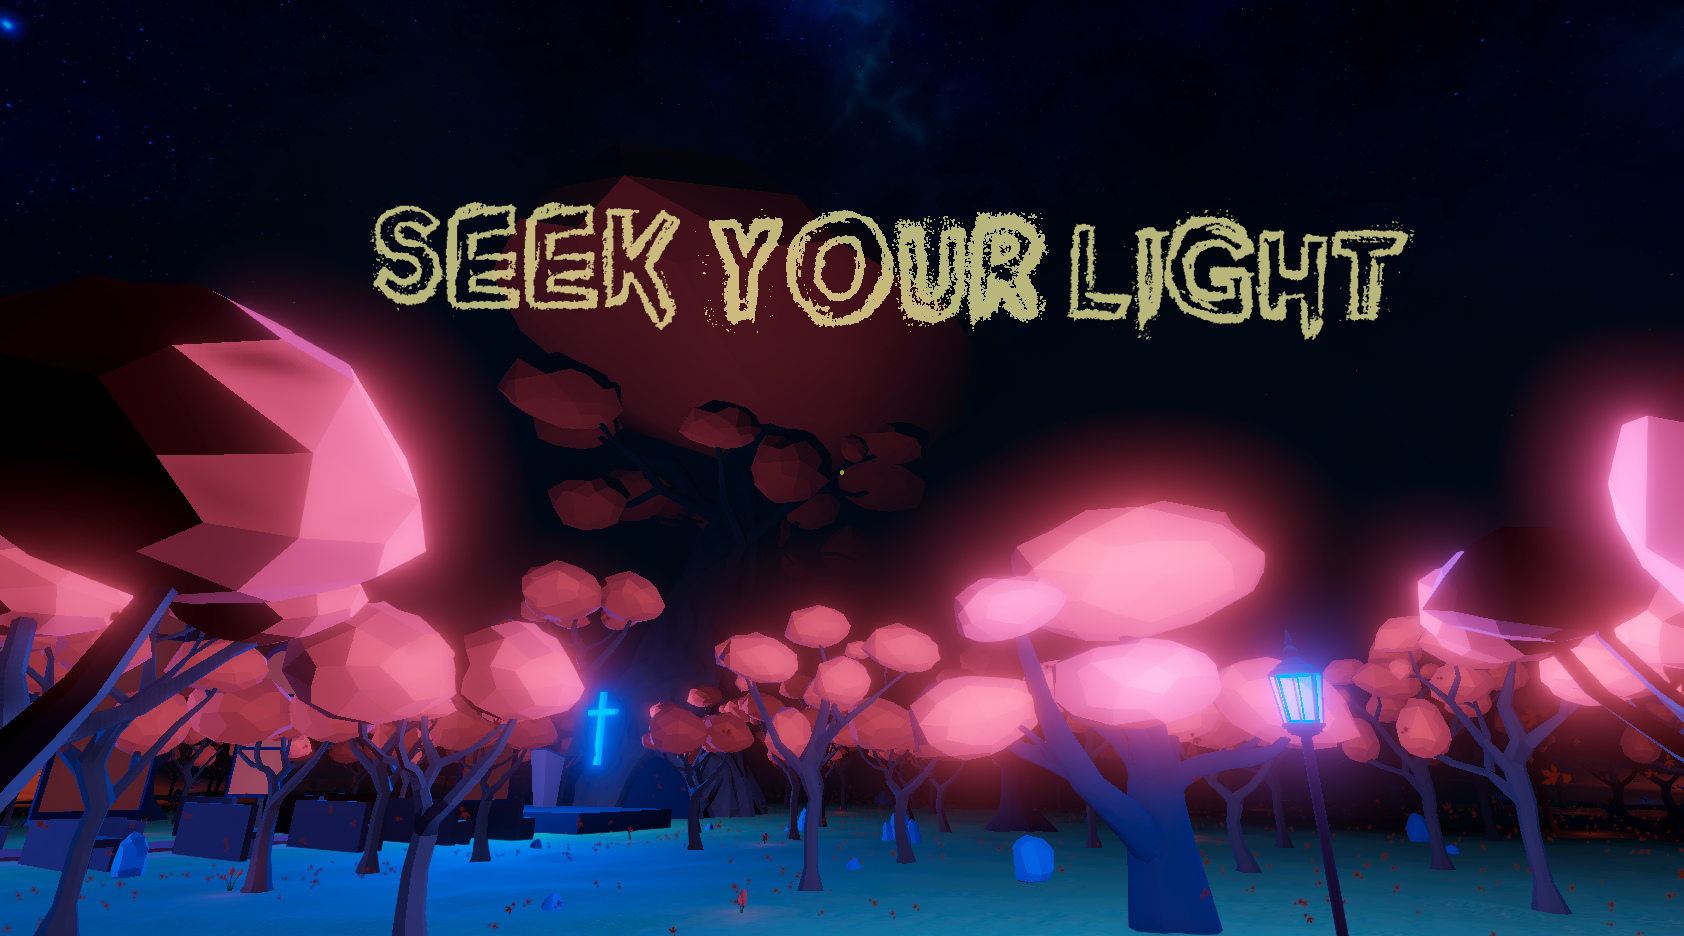 Seek Your Light